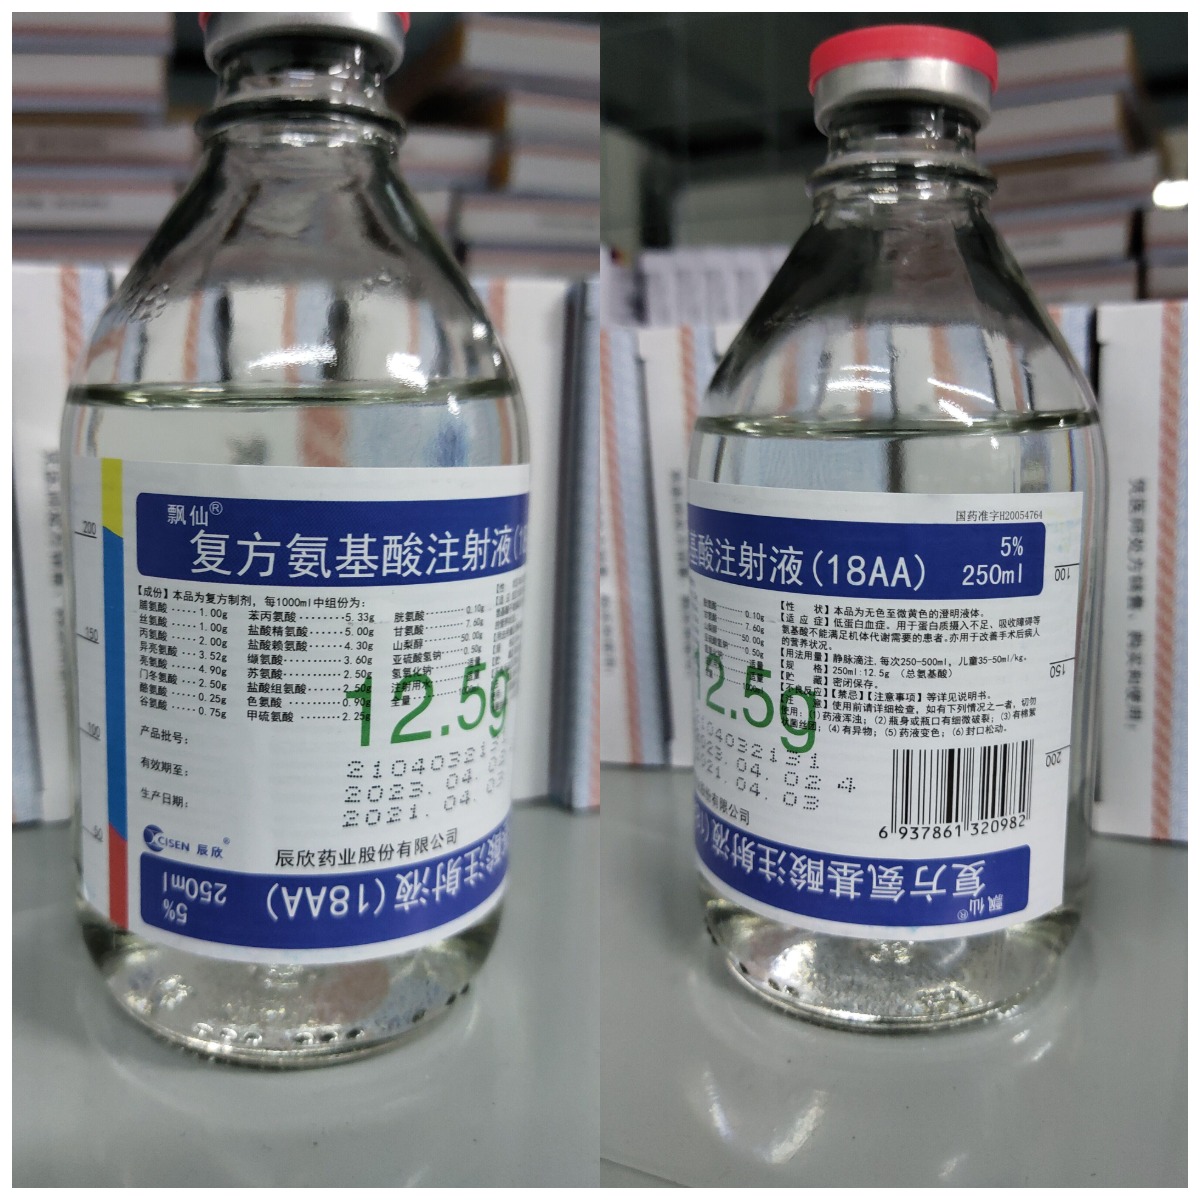 复方氨基酸注射液(18AA) 18AA